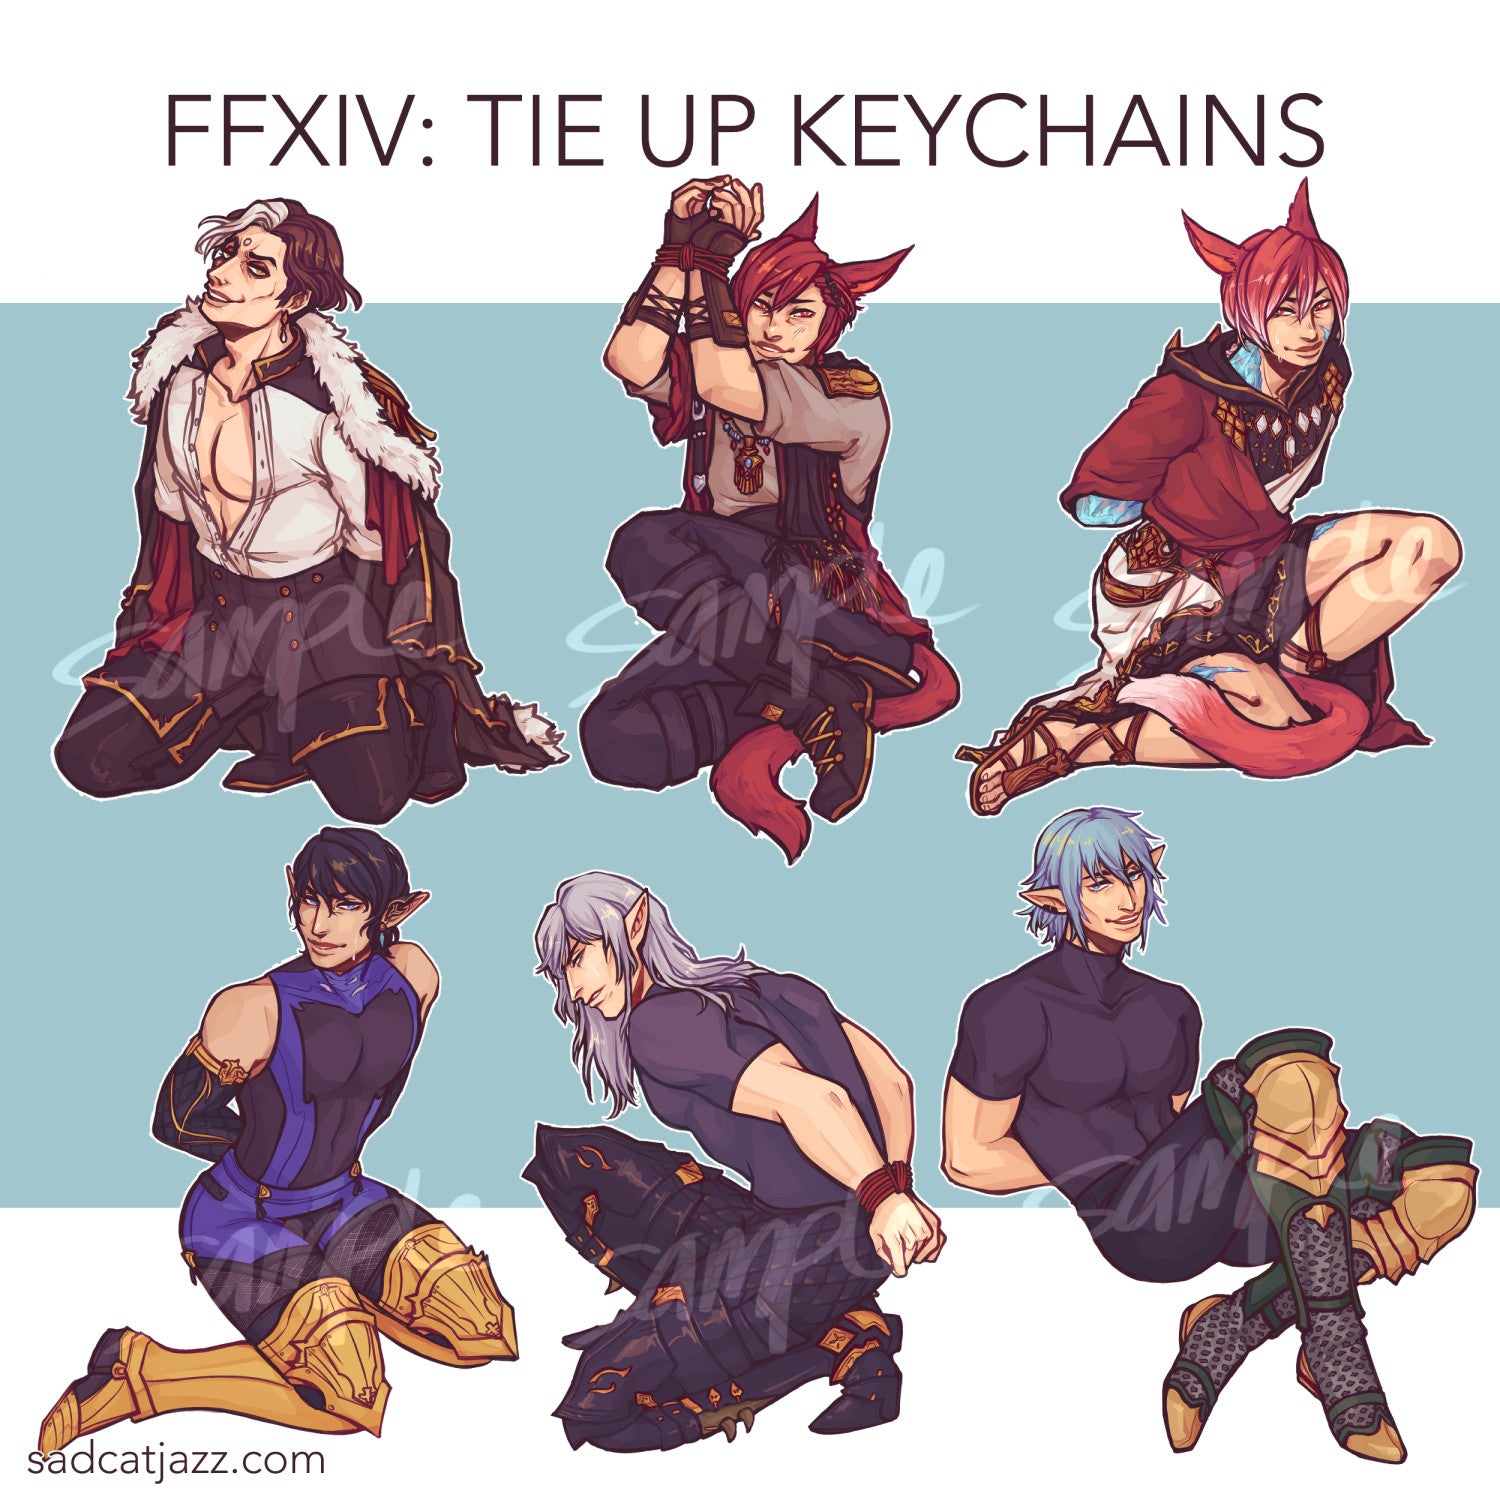 [Preorder/In stock] FFXIV: Tie-Up Keychains